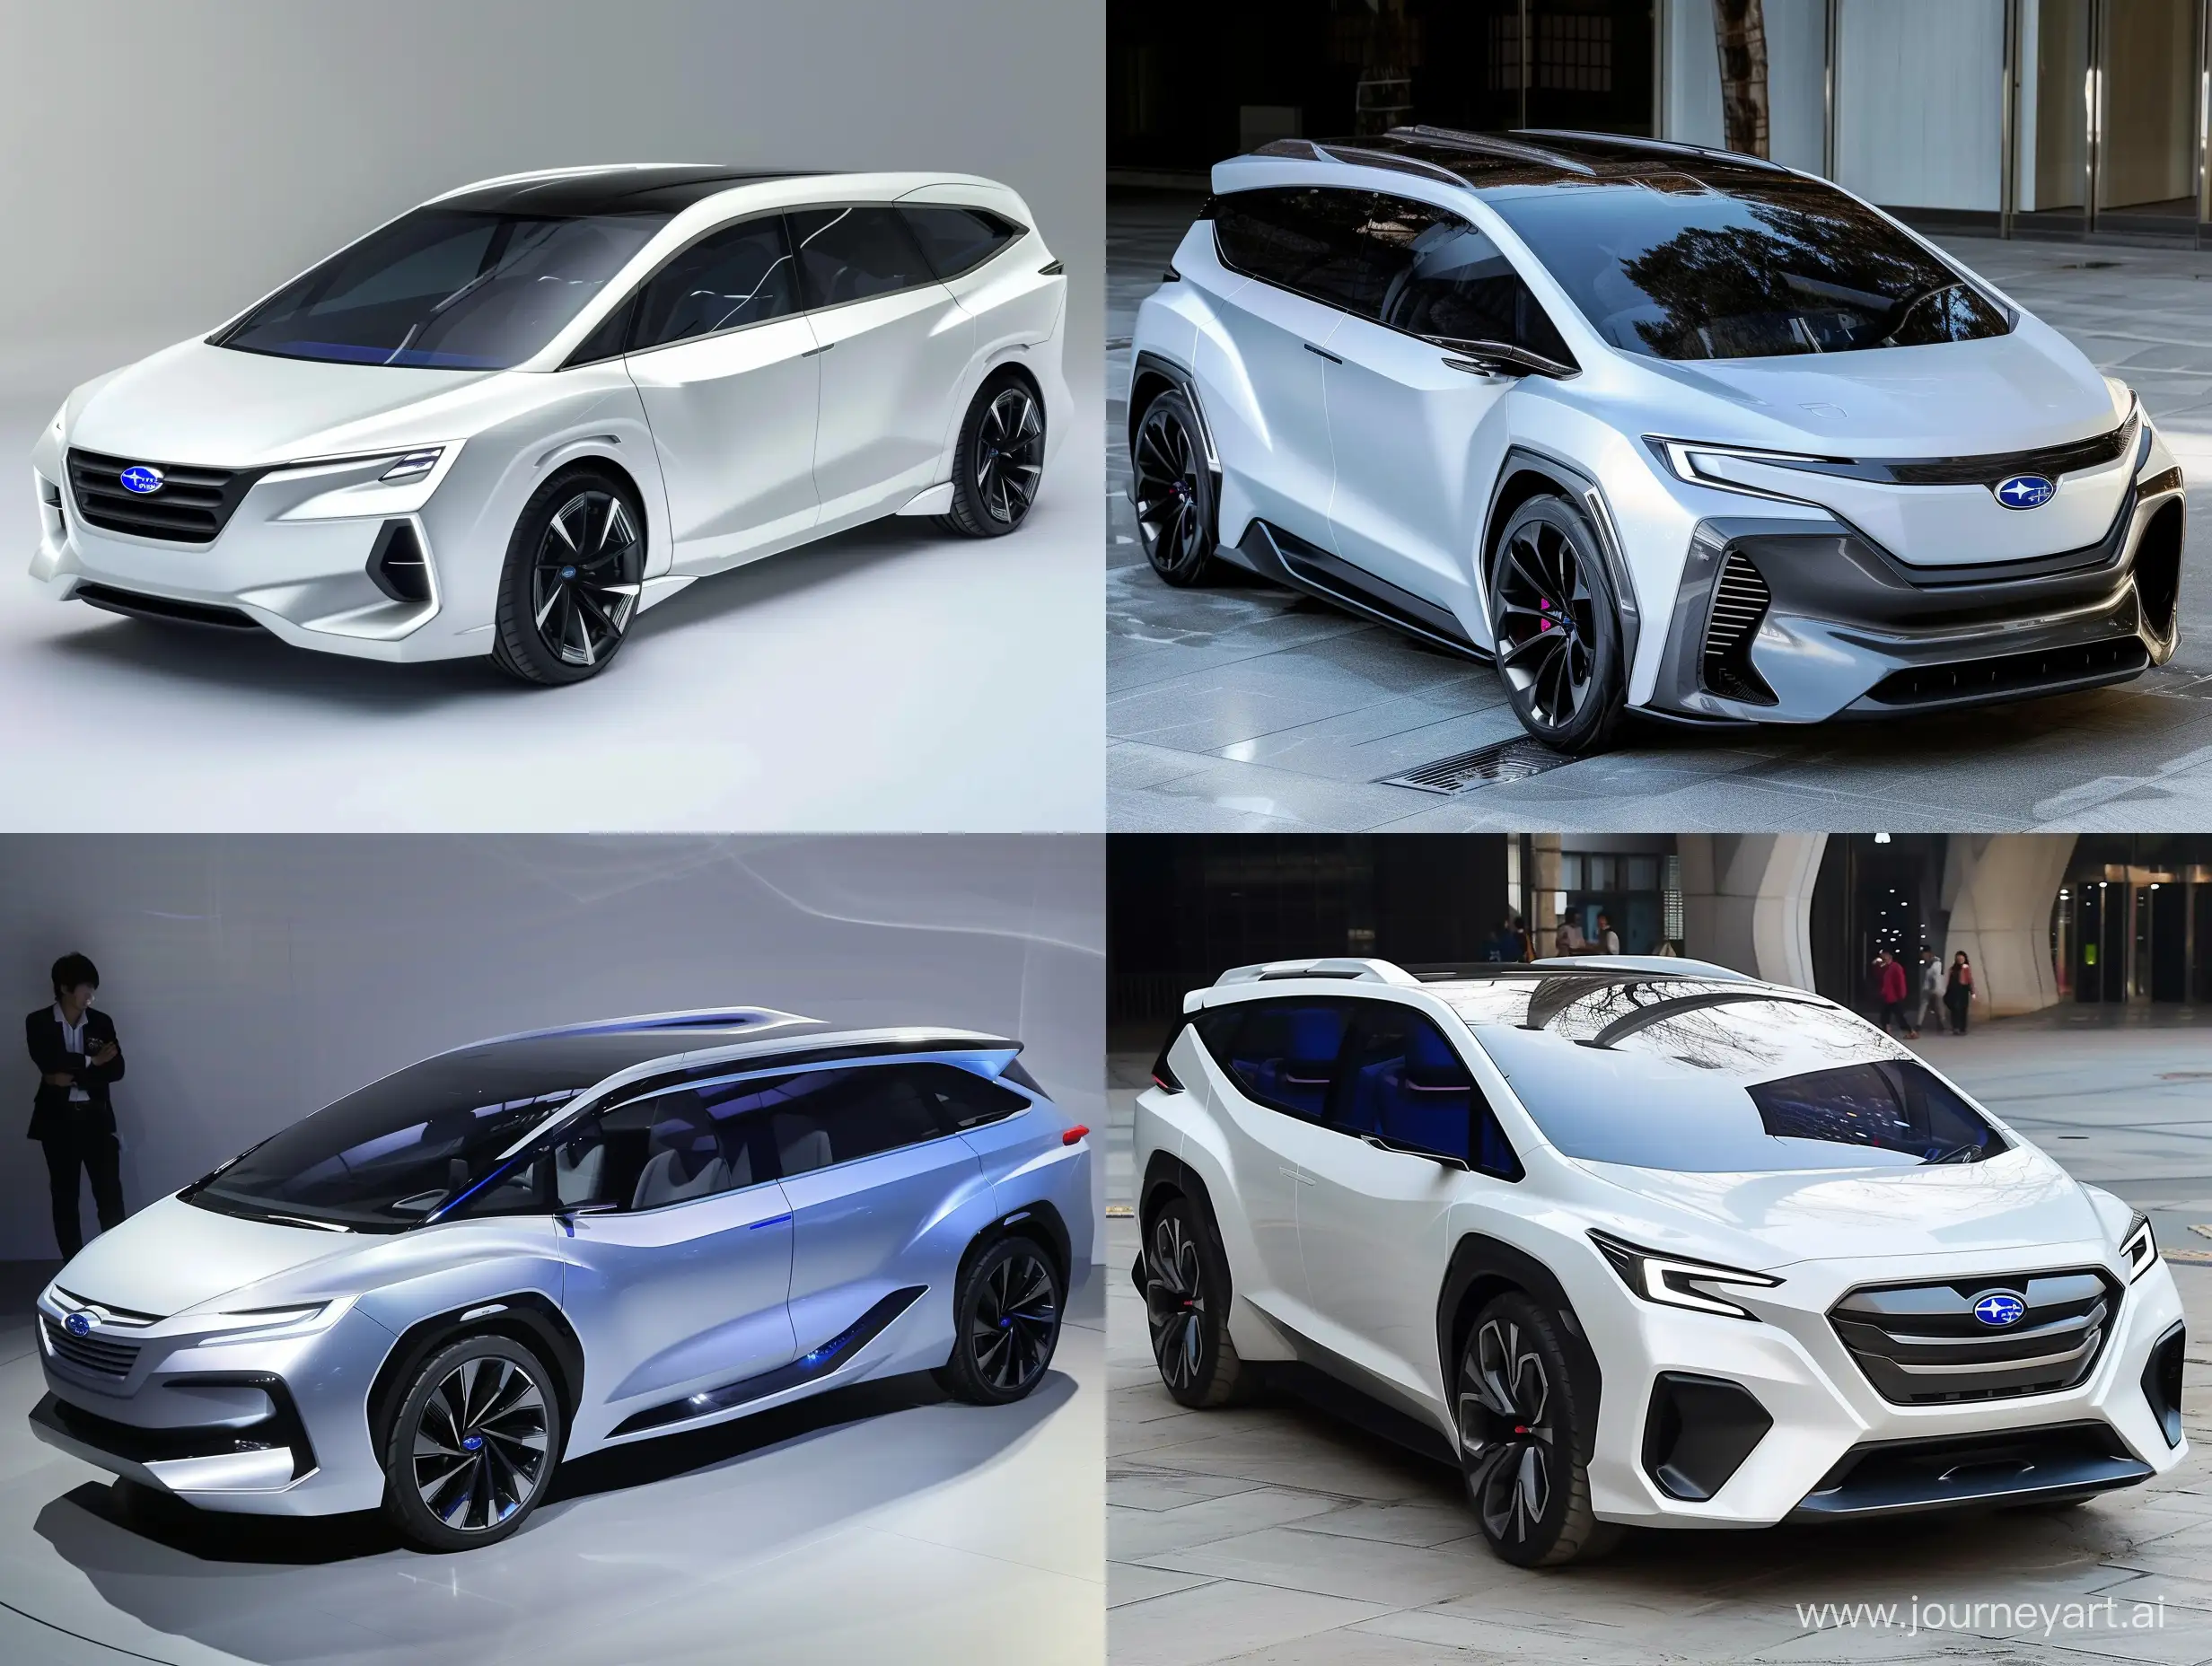 Subaru's futuristic new development minivan based on the Toyota Noah